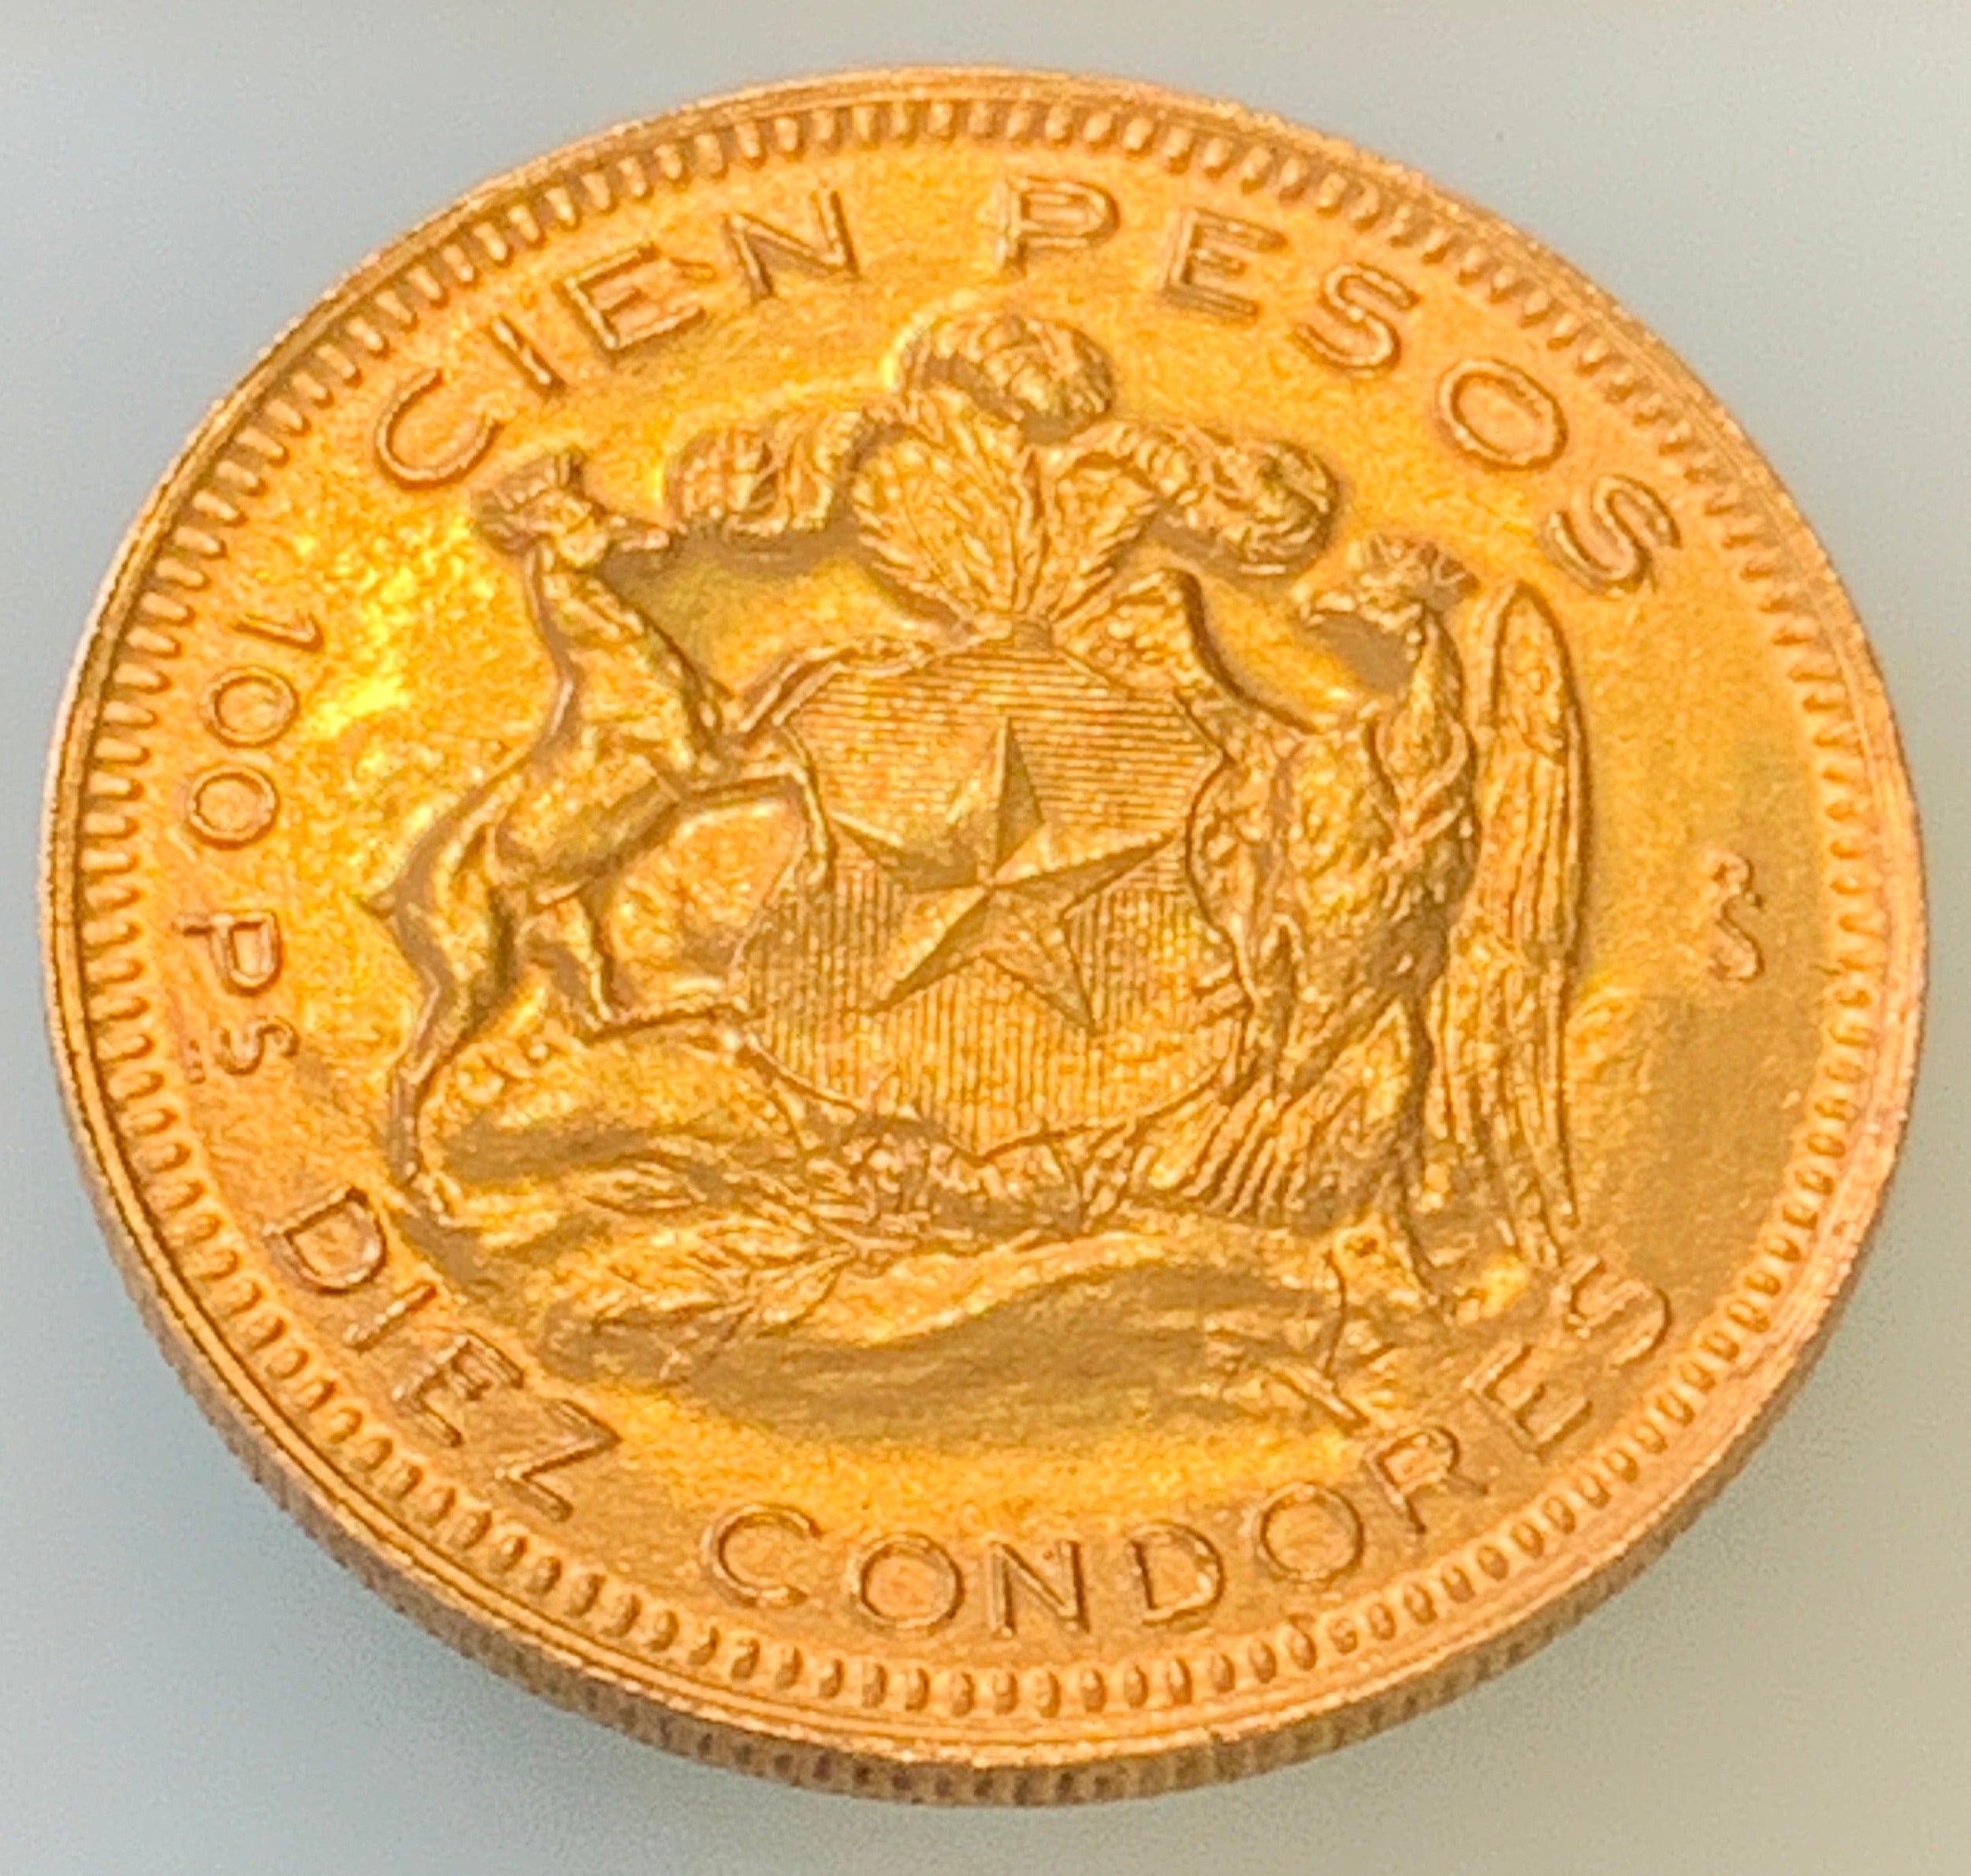 1958 Chile 100 Pesos Diez Condores Gold Coin 20.3 Grams Santiago Mint